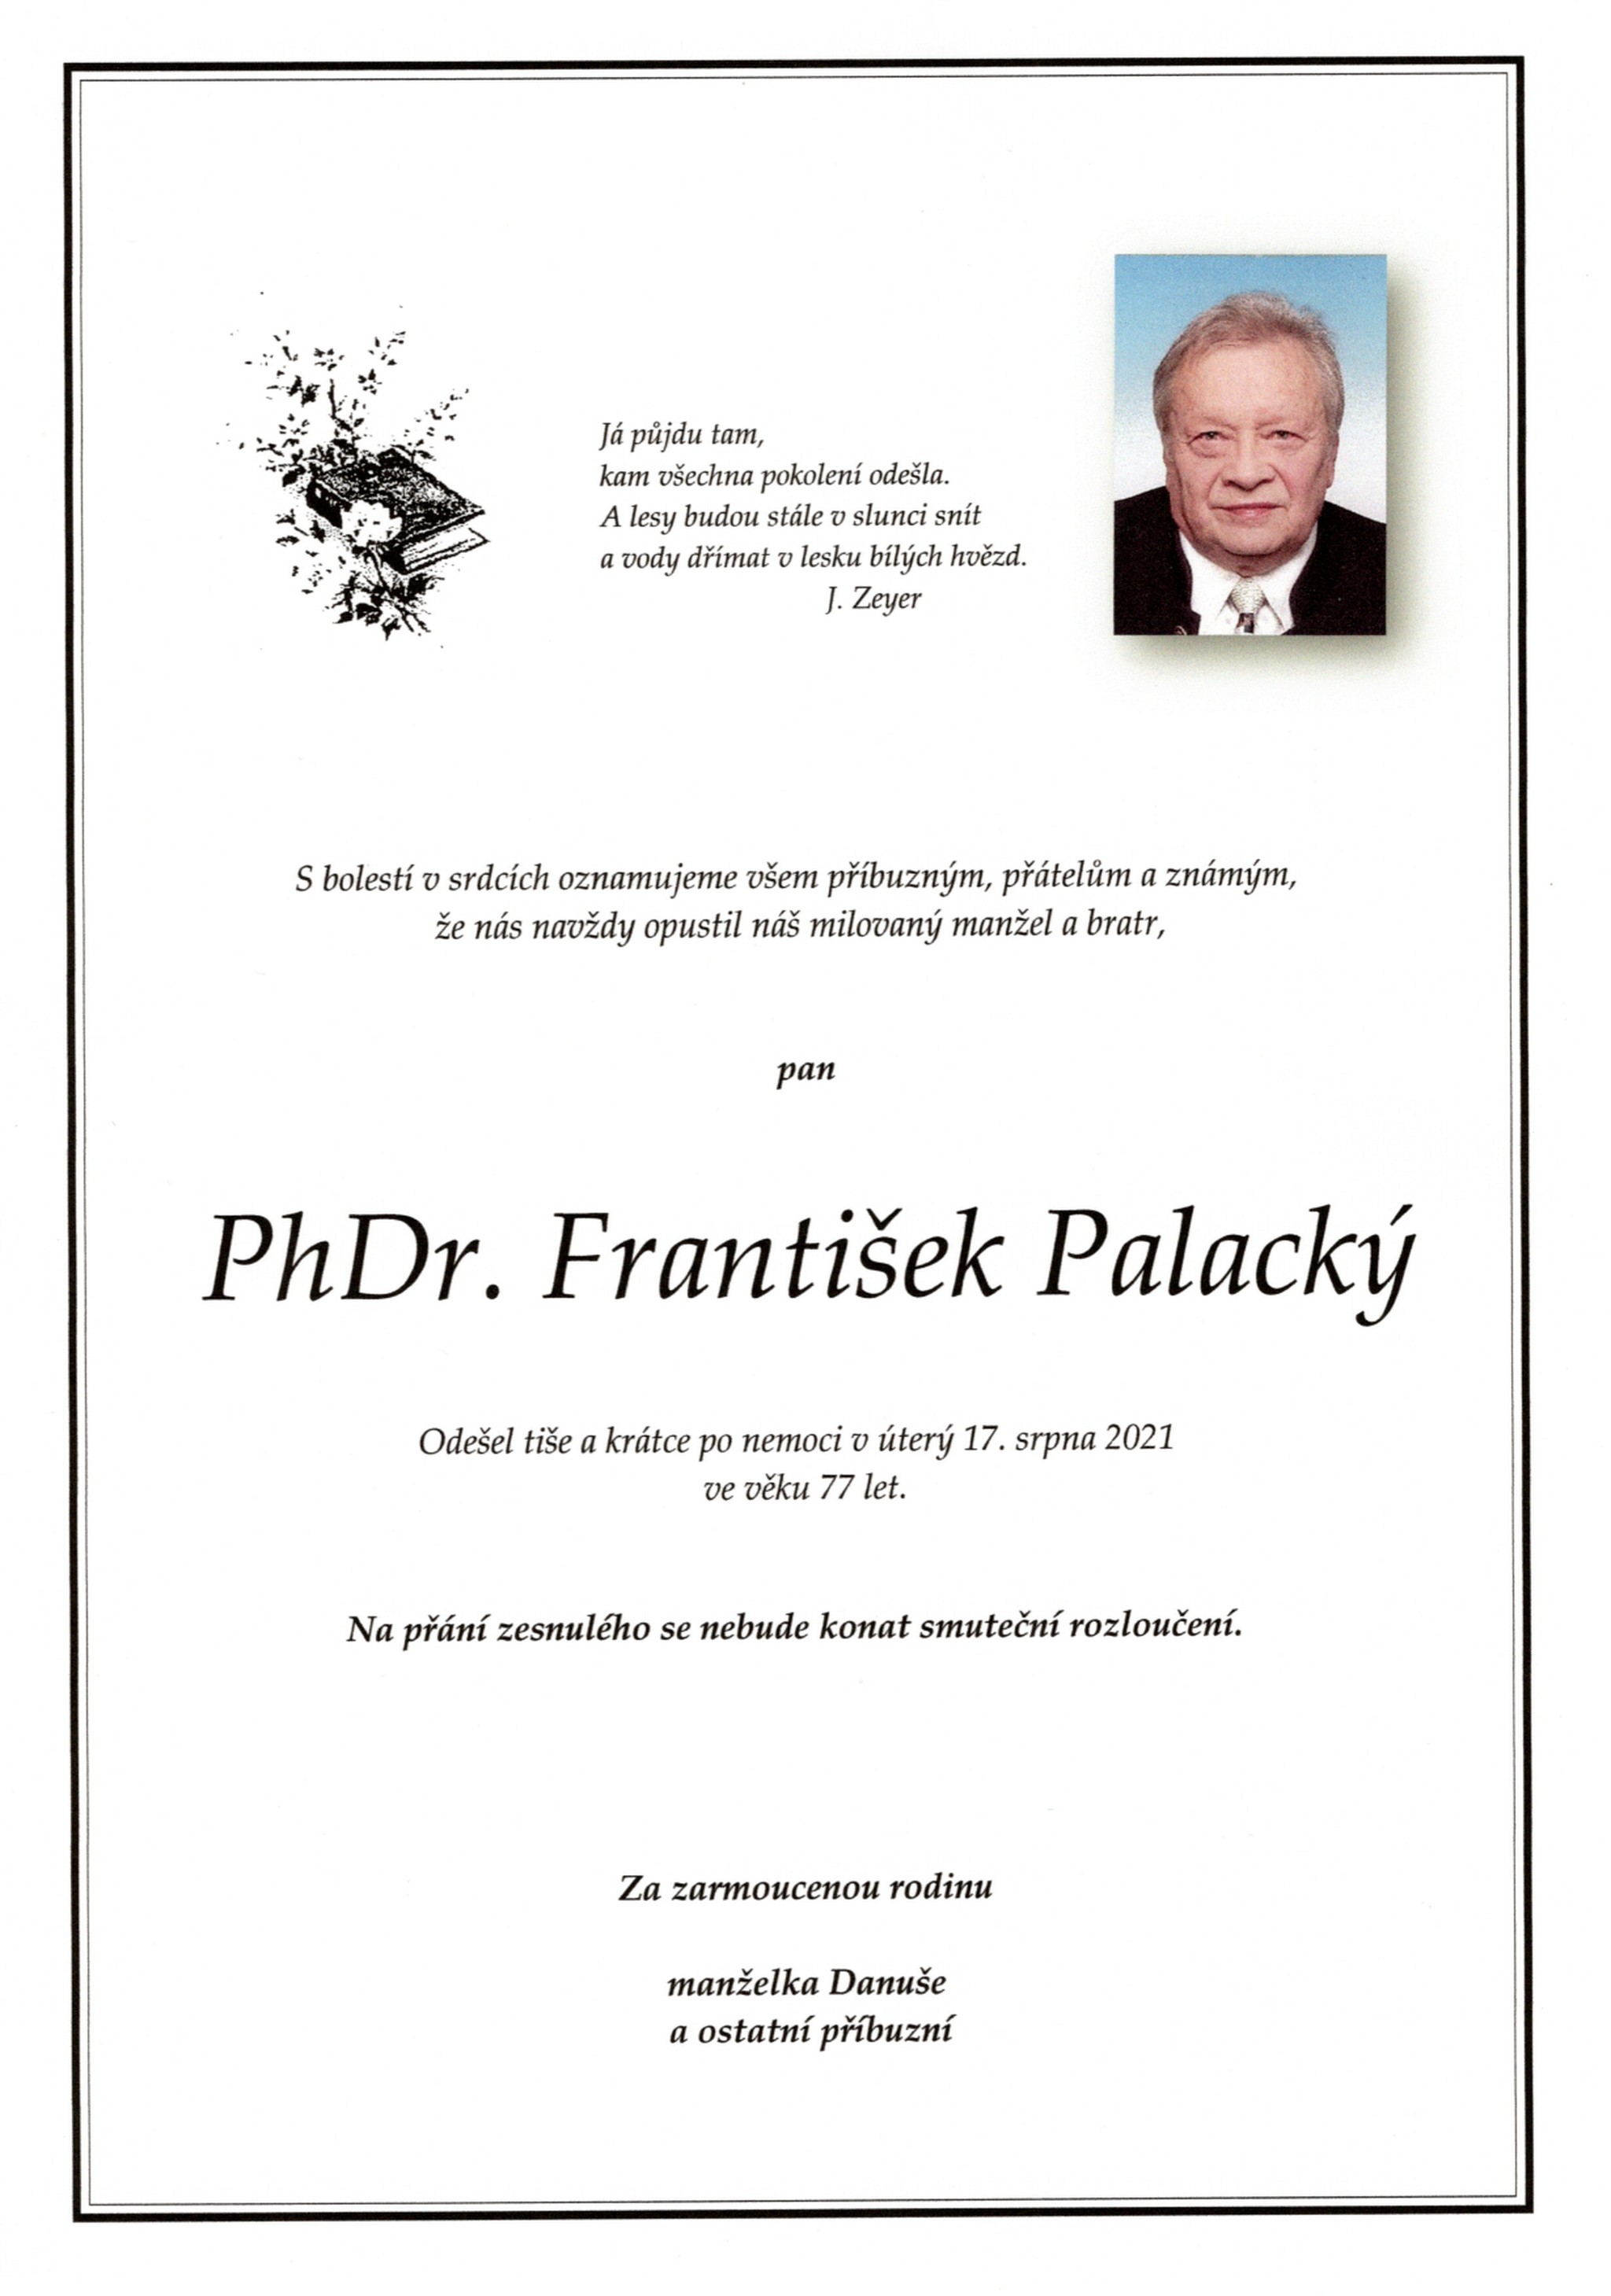 PhDr. František Palacký